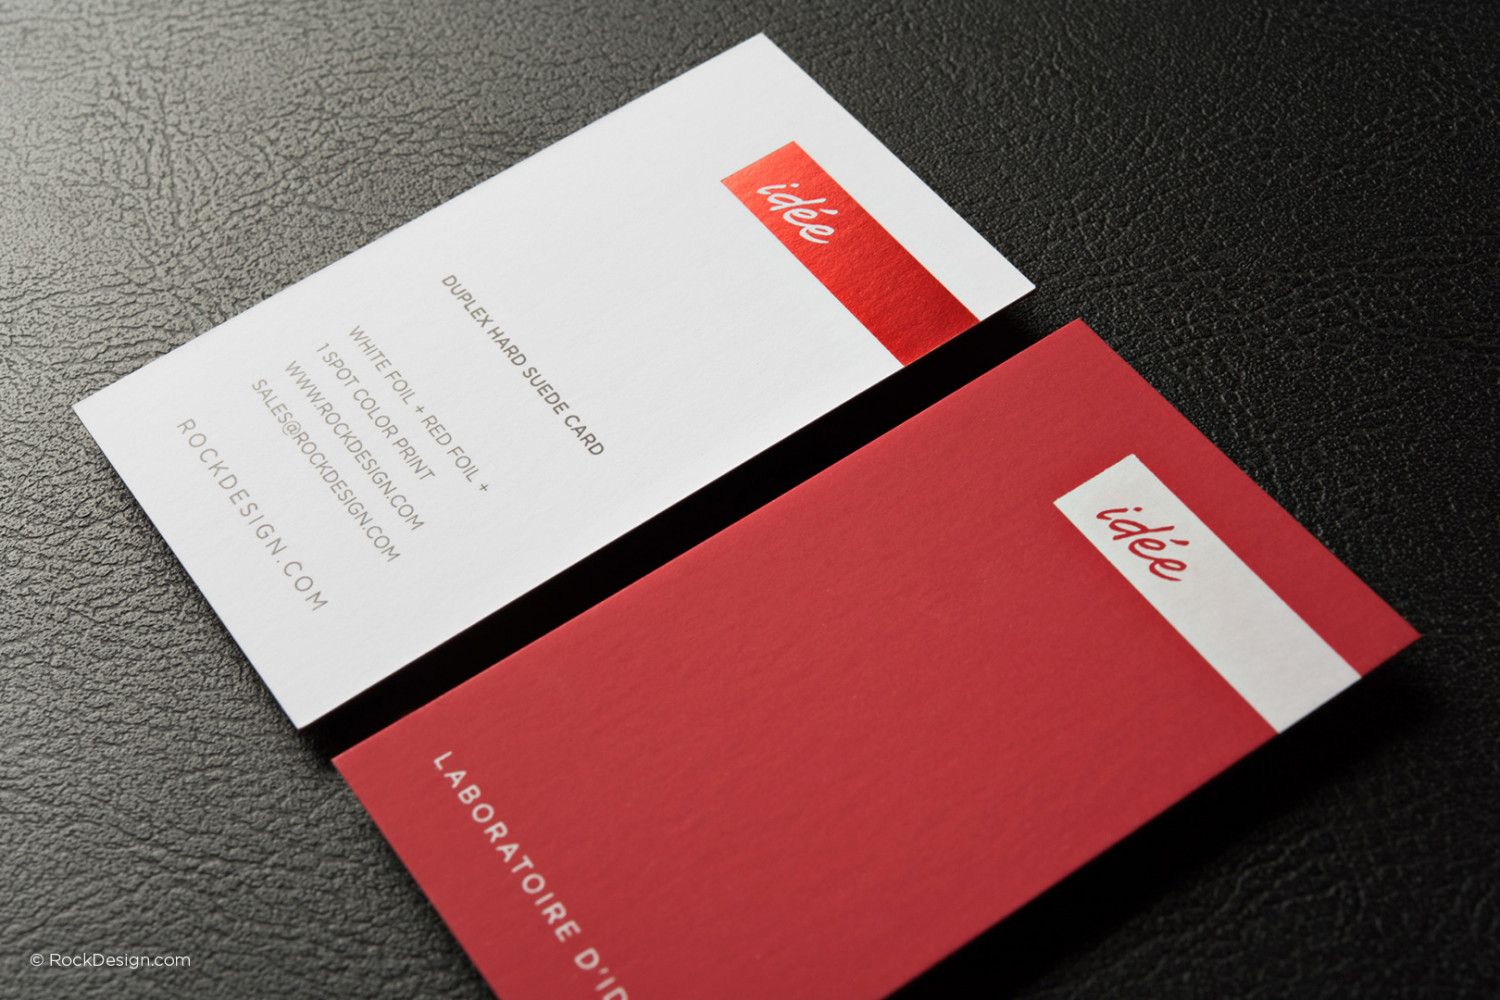 Print red hot foil business cards ONLINE TODAY | RockDesign.com